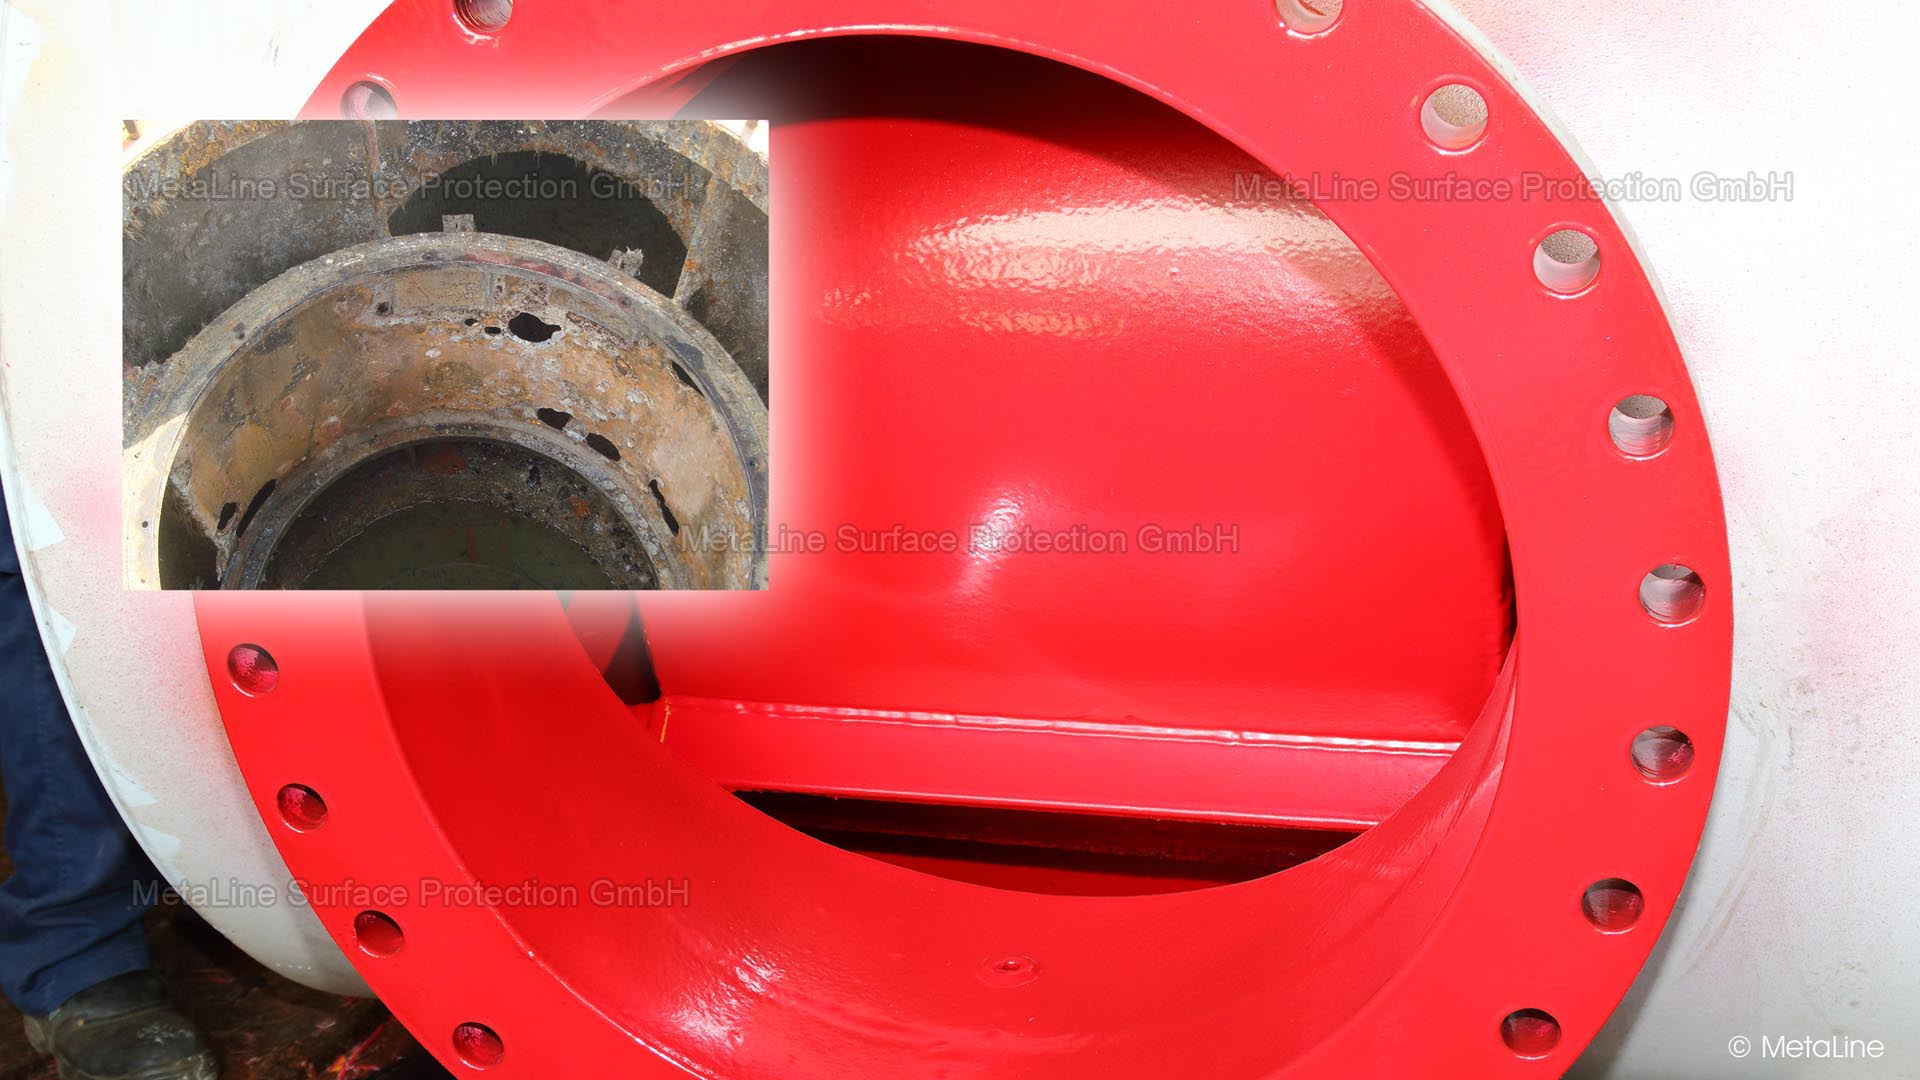 1637-0190B-join_Filter_Drosselklappe_Reparatur_Beschichtung_valve_repair_coating_corrosion_protection